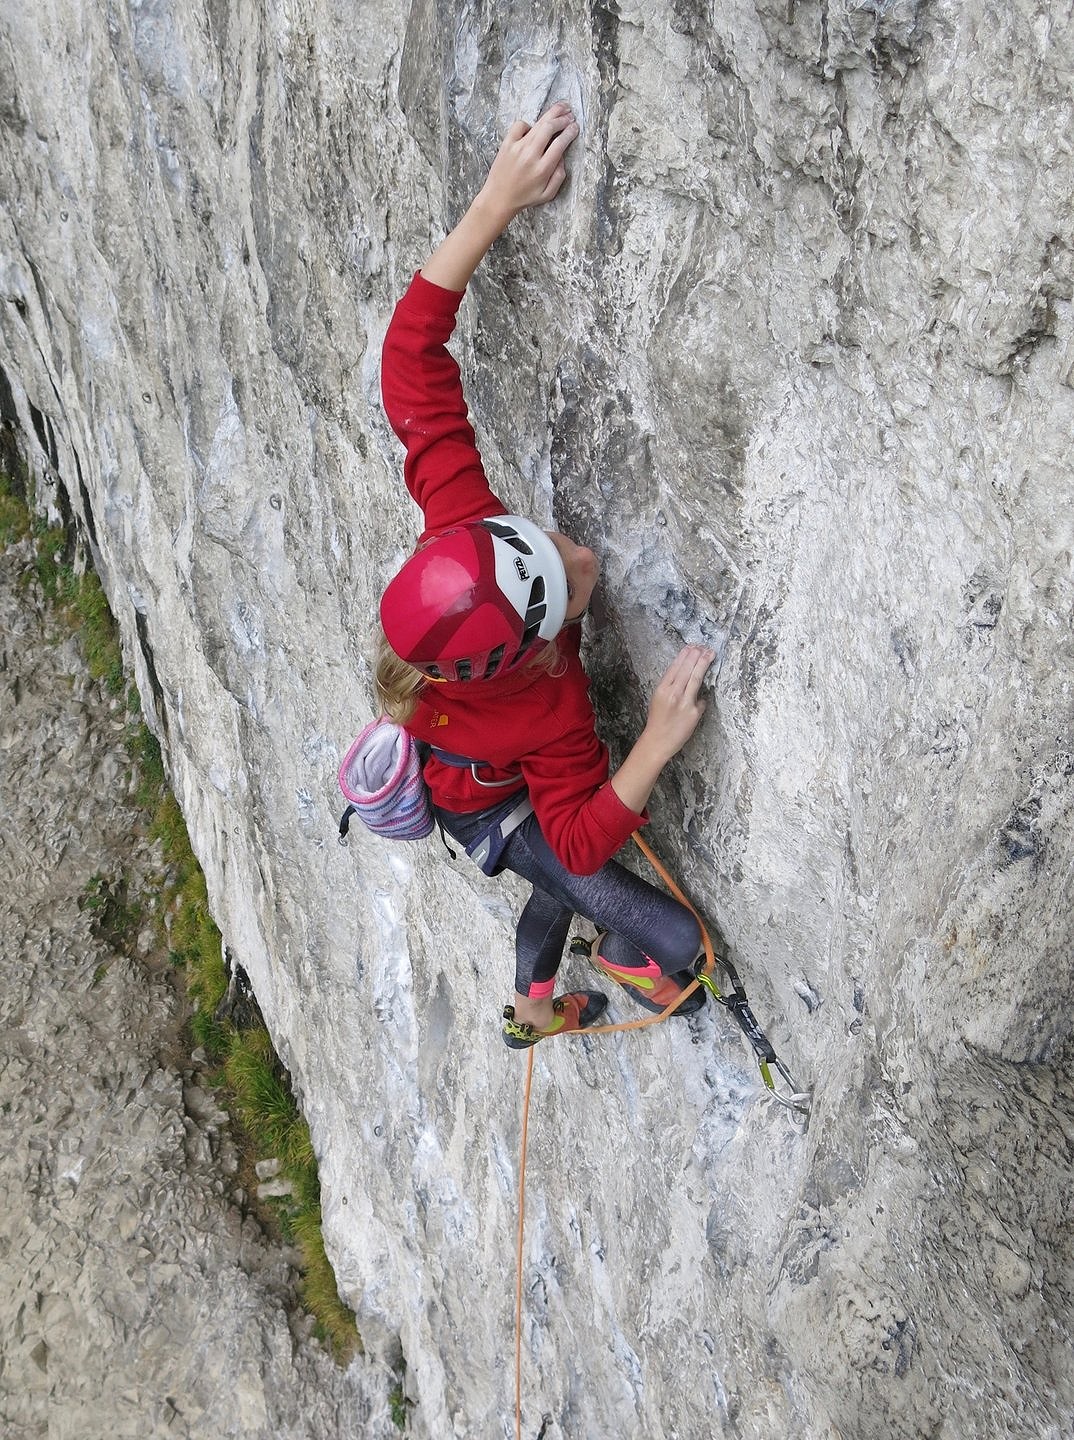 Hannah Toward demonstrates high-step gaston technique on Free and Even Easier 7a+ at Malham.  © Neil Gresham